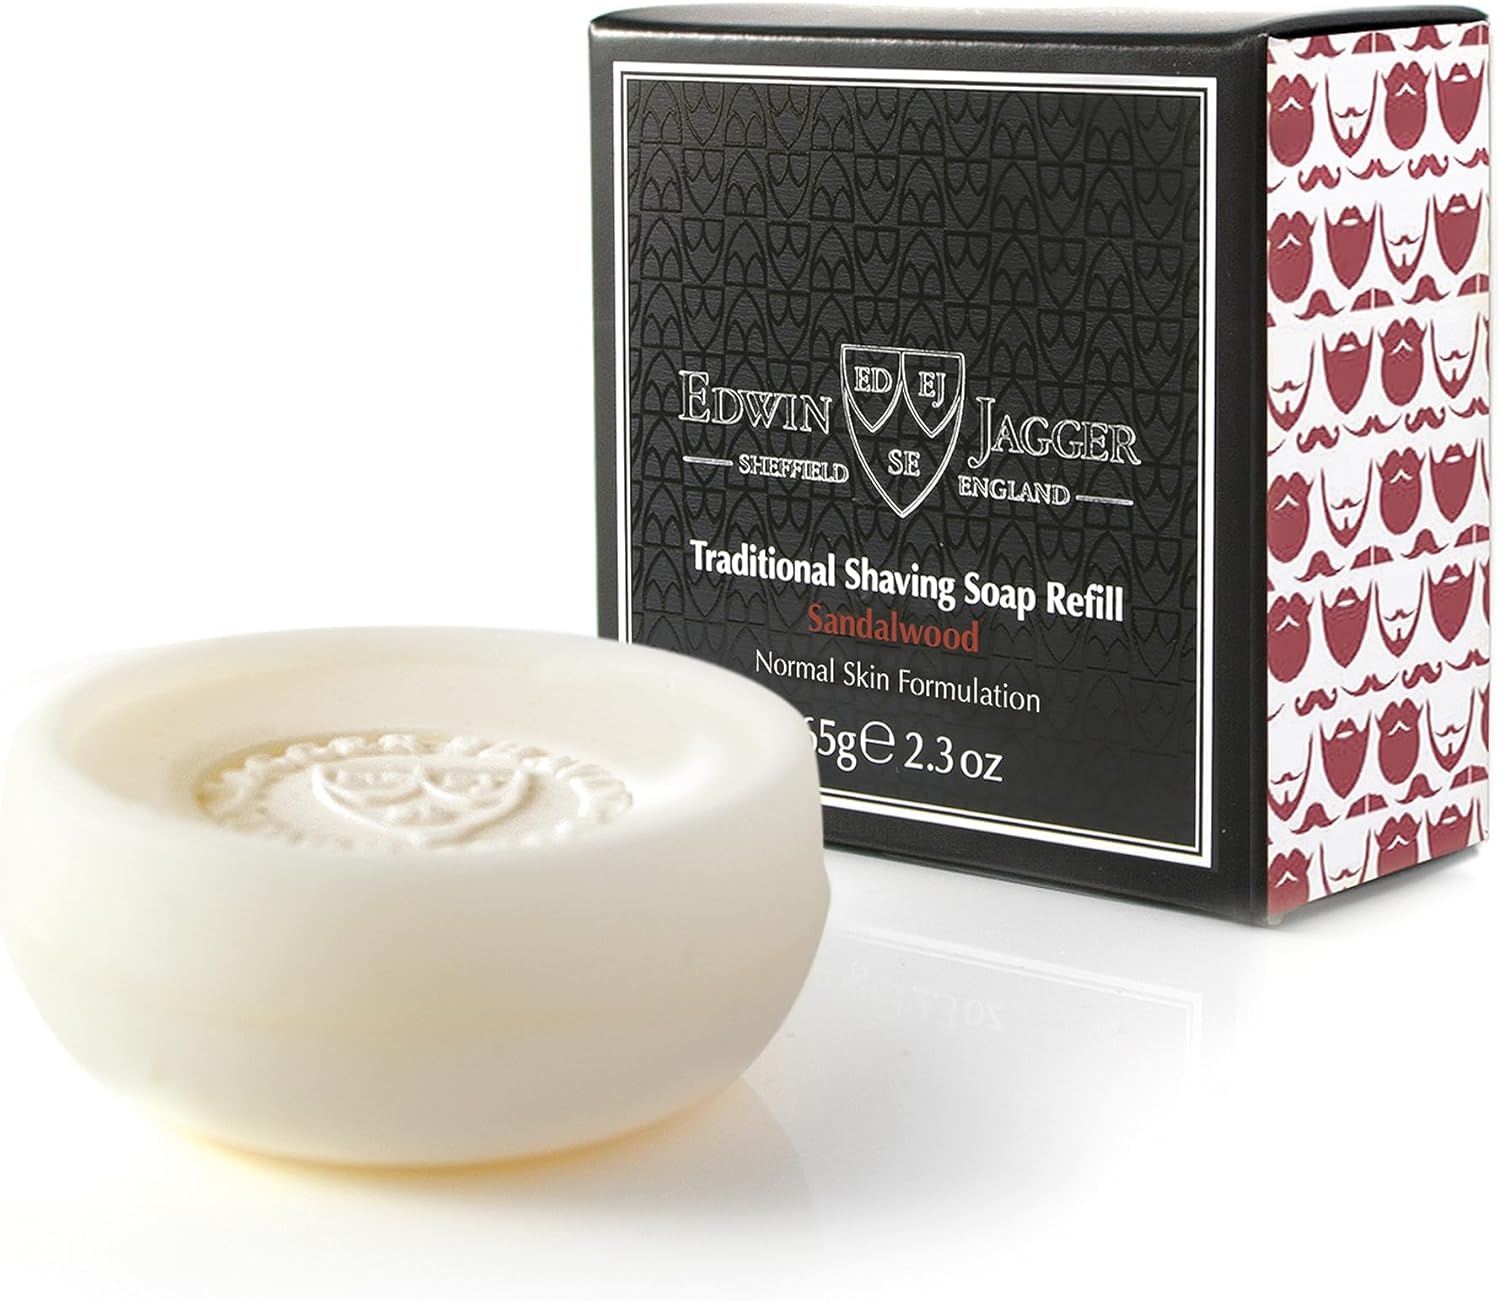 Edwin Jagger SSSW Sandalwood 99.9% Natural Traditional Shaving Soap 65g Refill